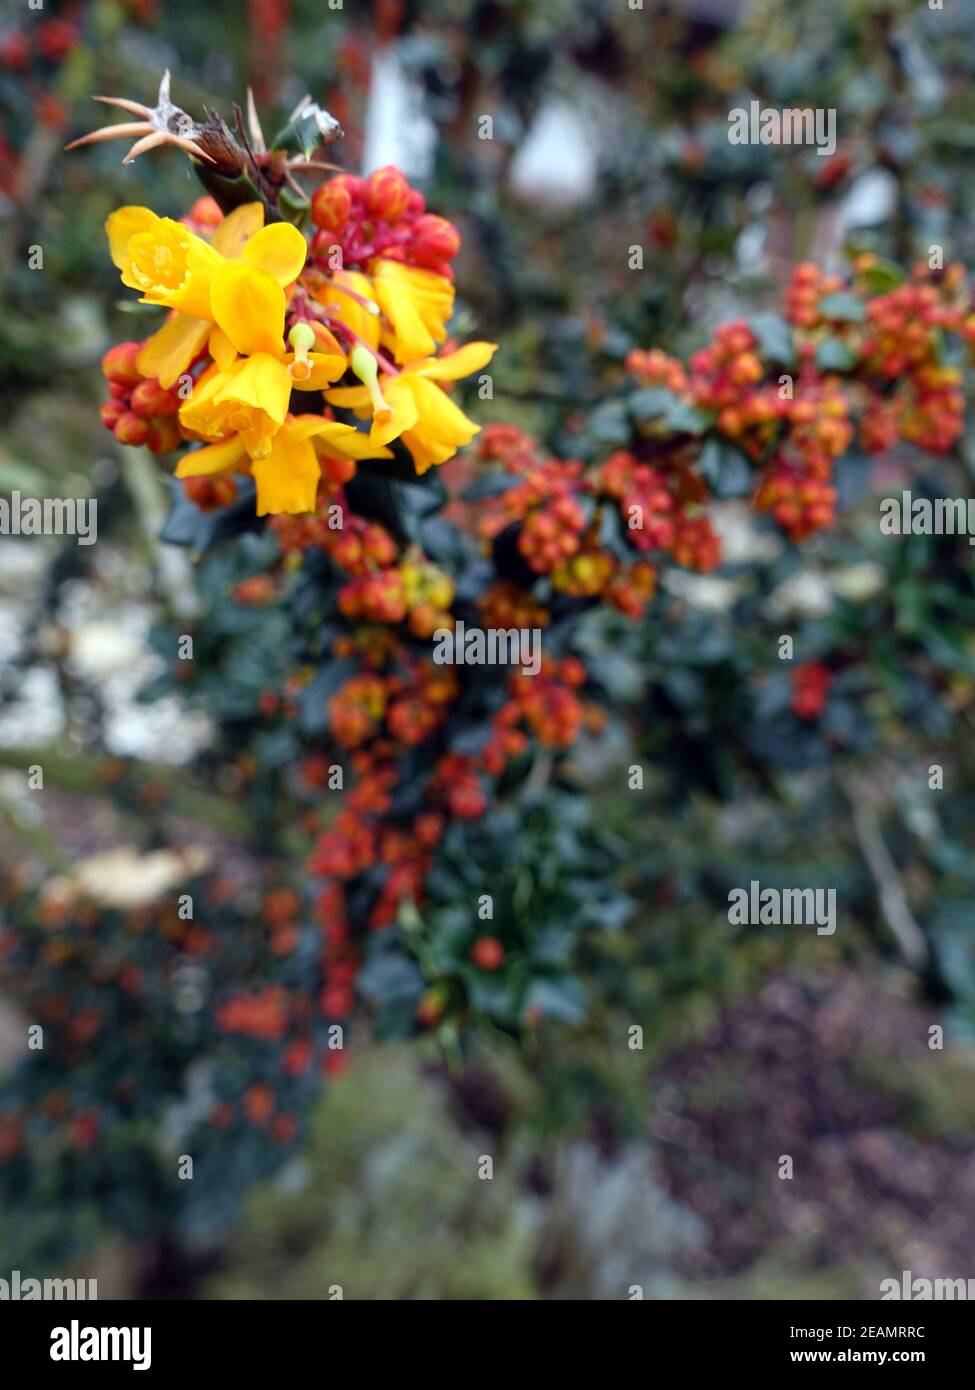 yellow flowers of Darwin's barberry (Berberis darwinii) Stock Photo